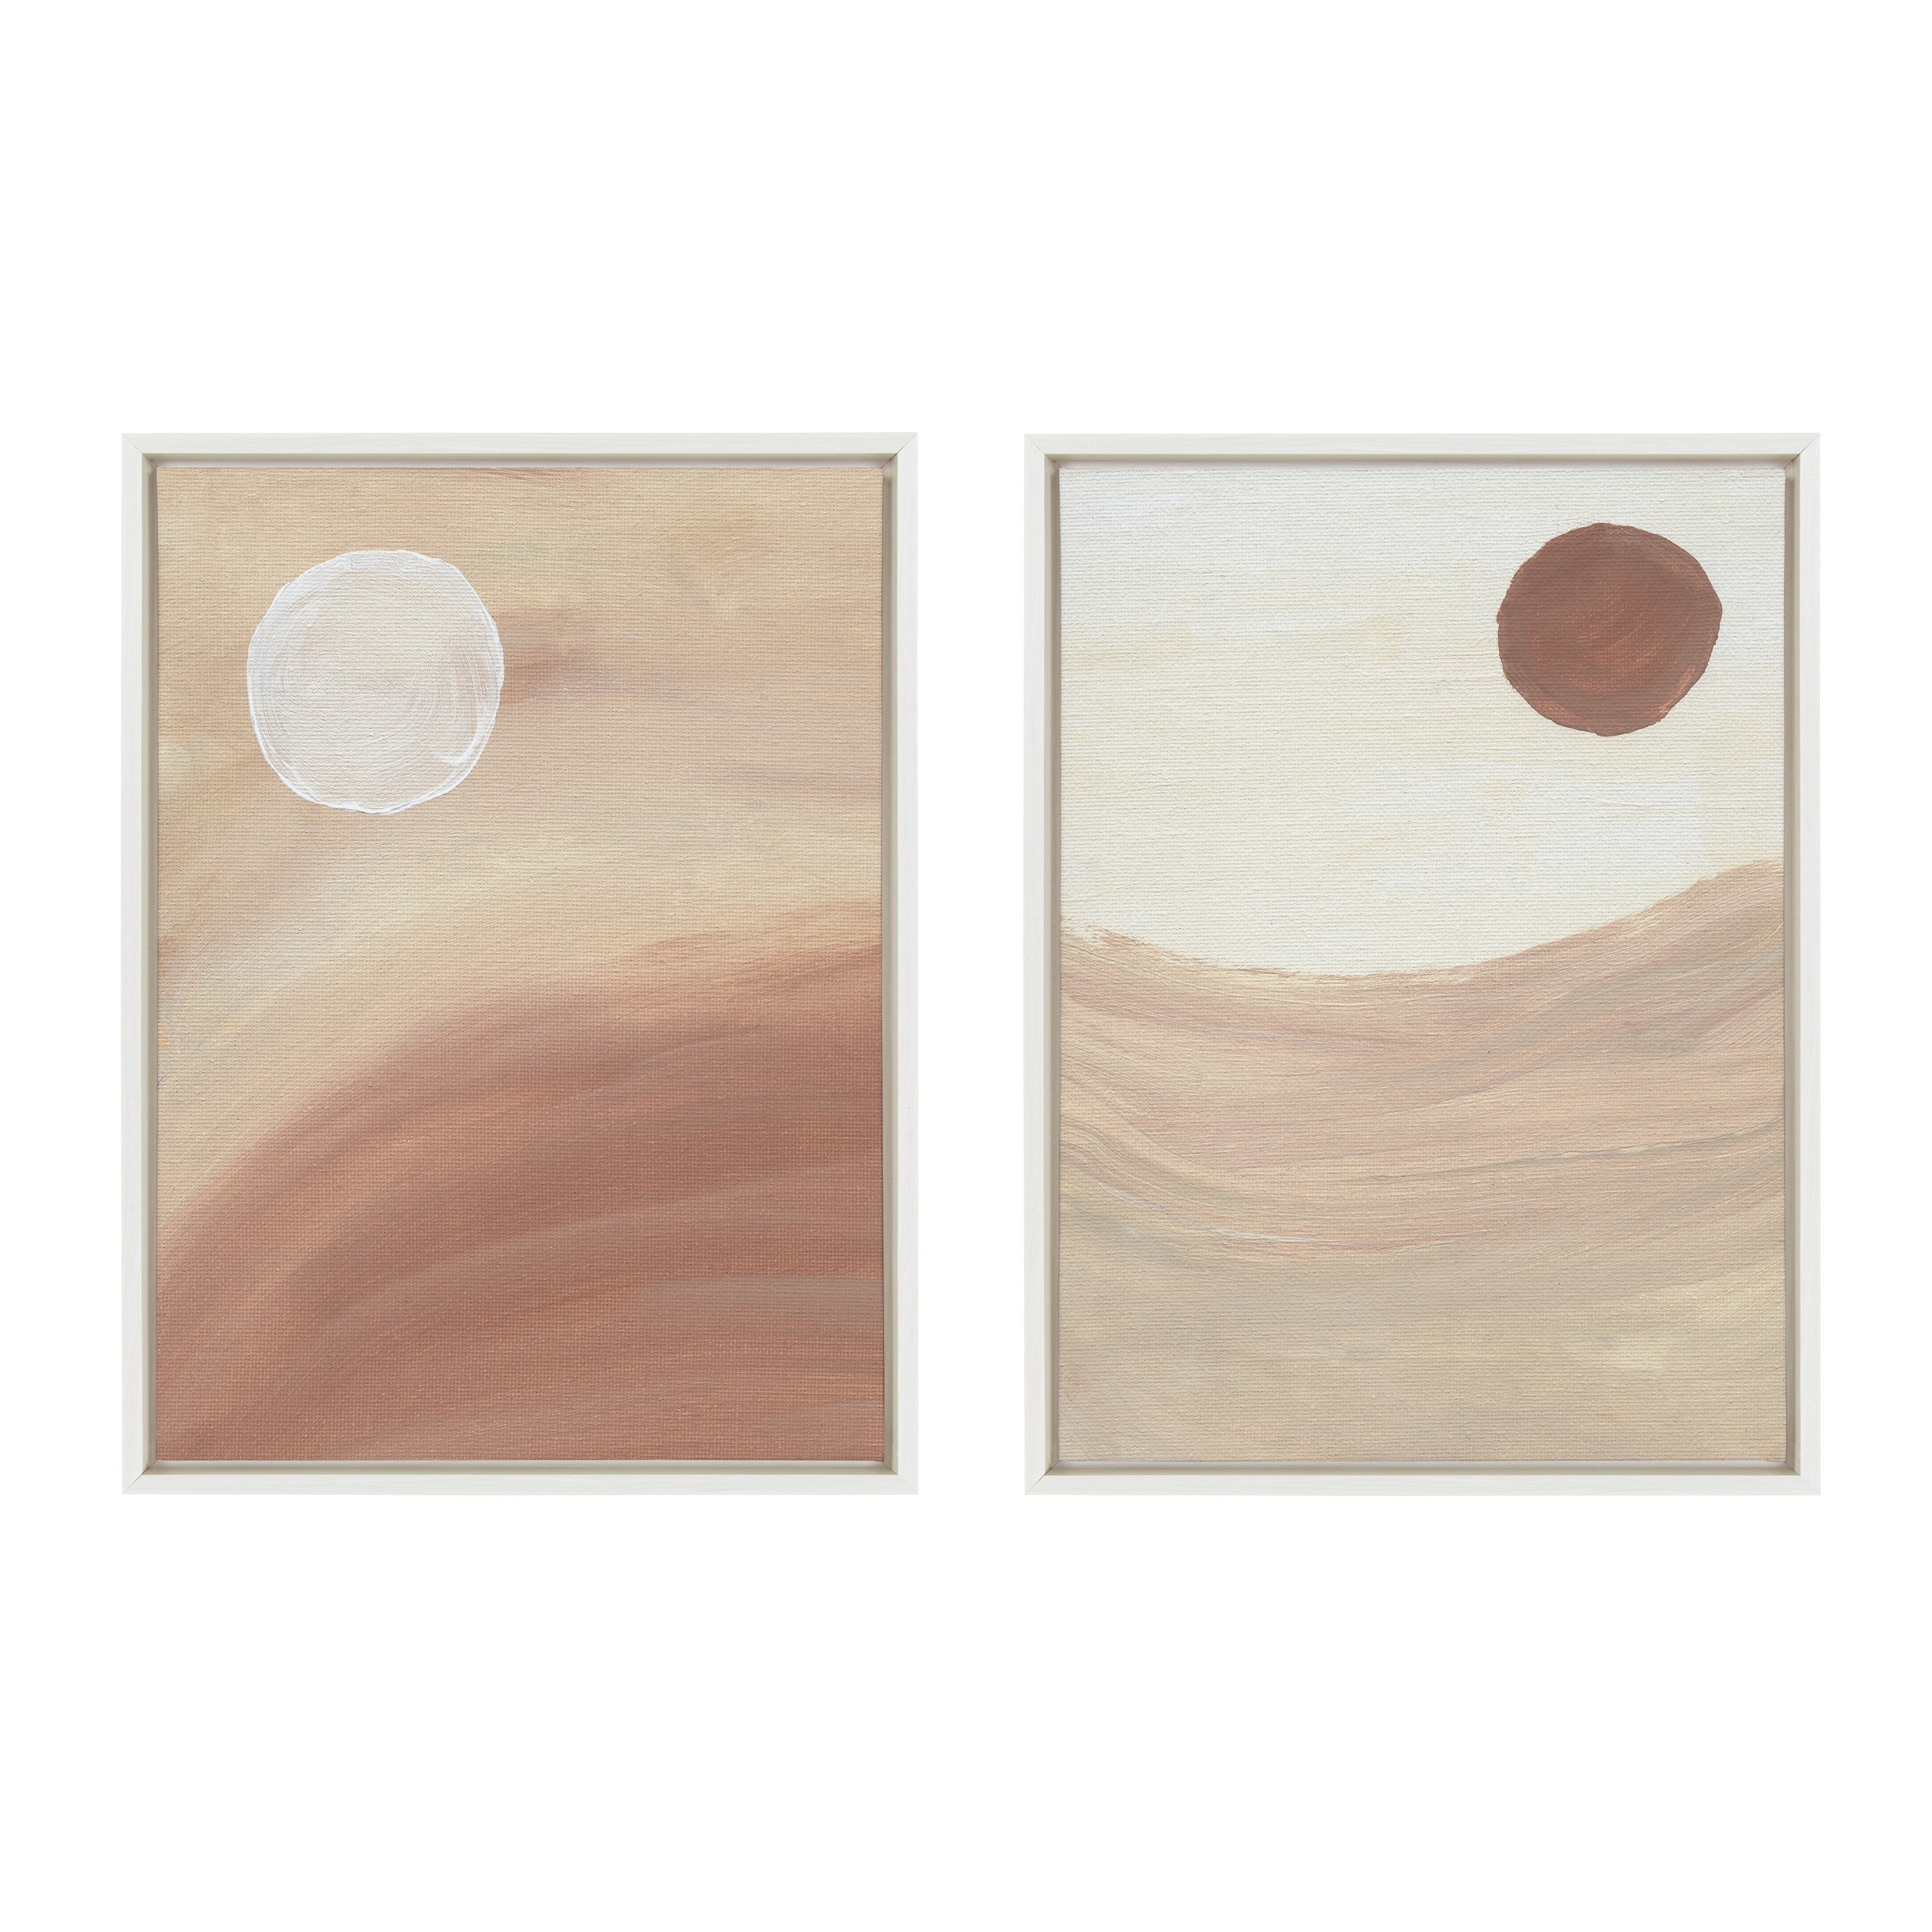 Sylvie Sandy Moon and Carmamel Sunset Framed Canvas Art Set by Mentoring Positives